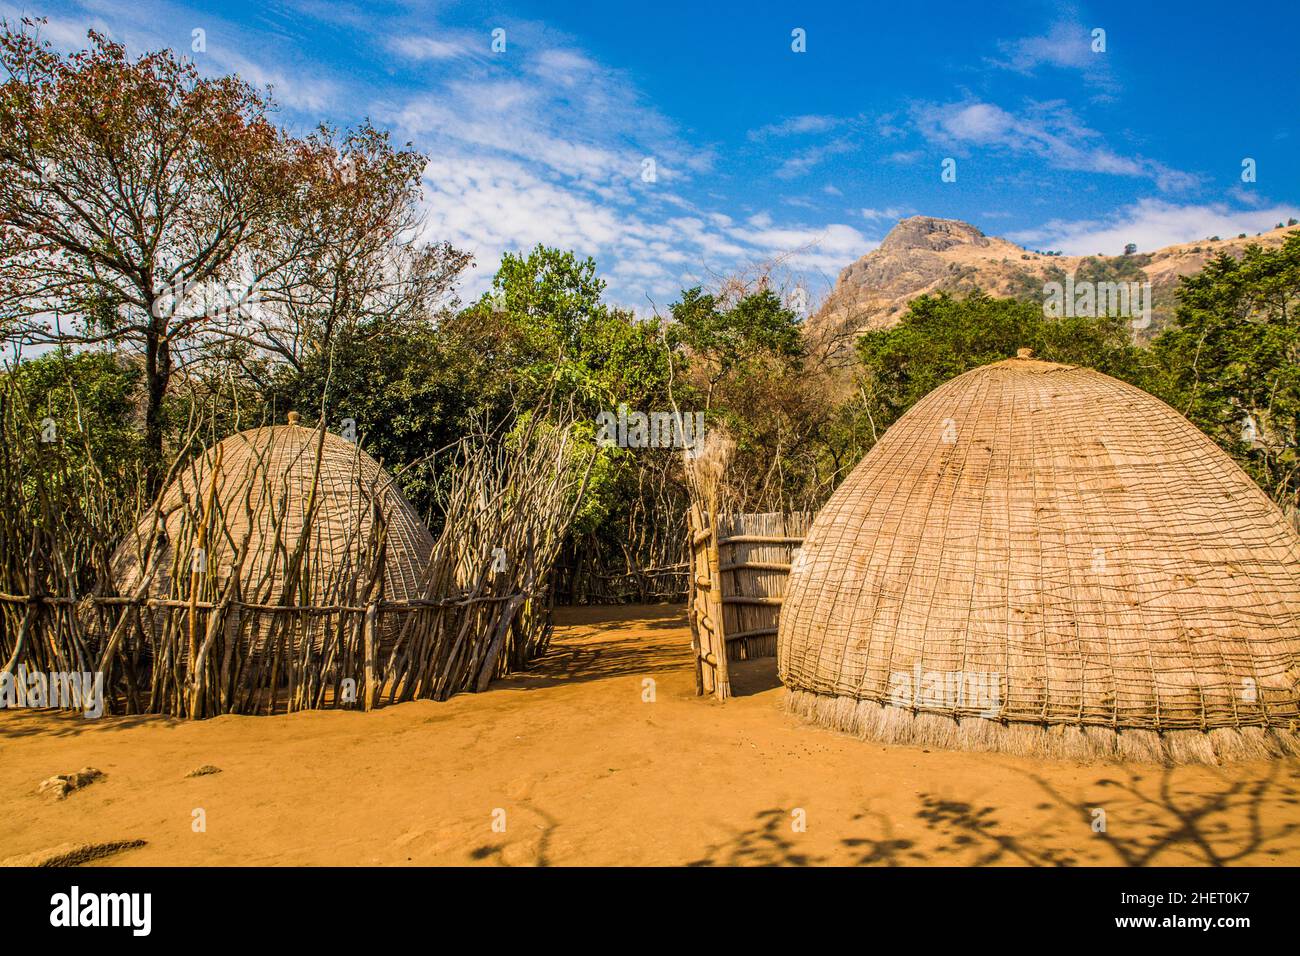 Bienenstockhütten, Einblicke in das Leben Swazis, Swazi Cultural Village, Wildlife Sanctuary, Swasiland, Eswatini, Südafrika, Milwane Stockfoto